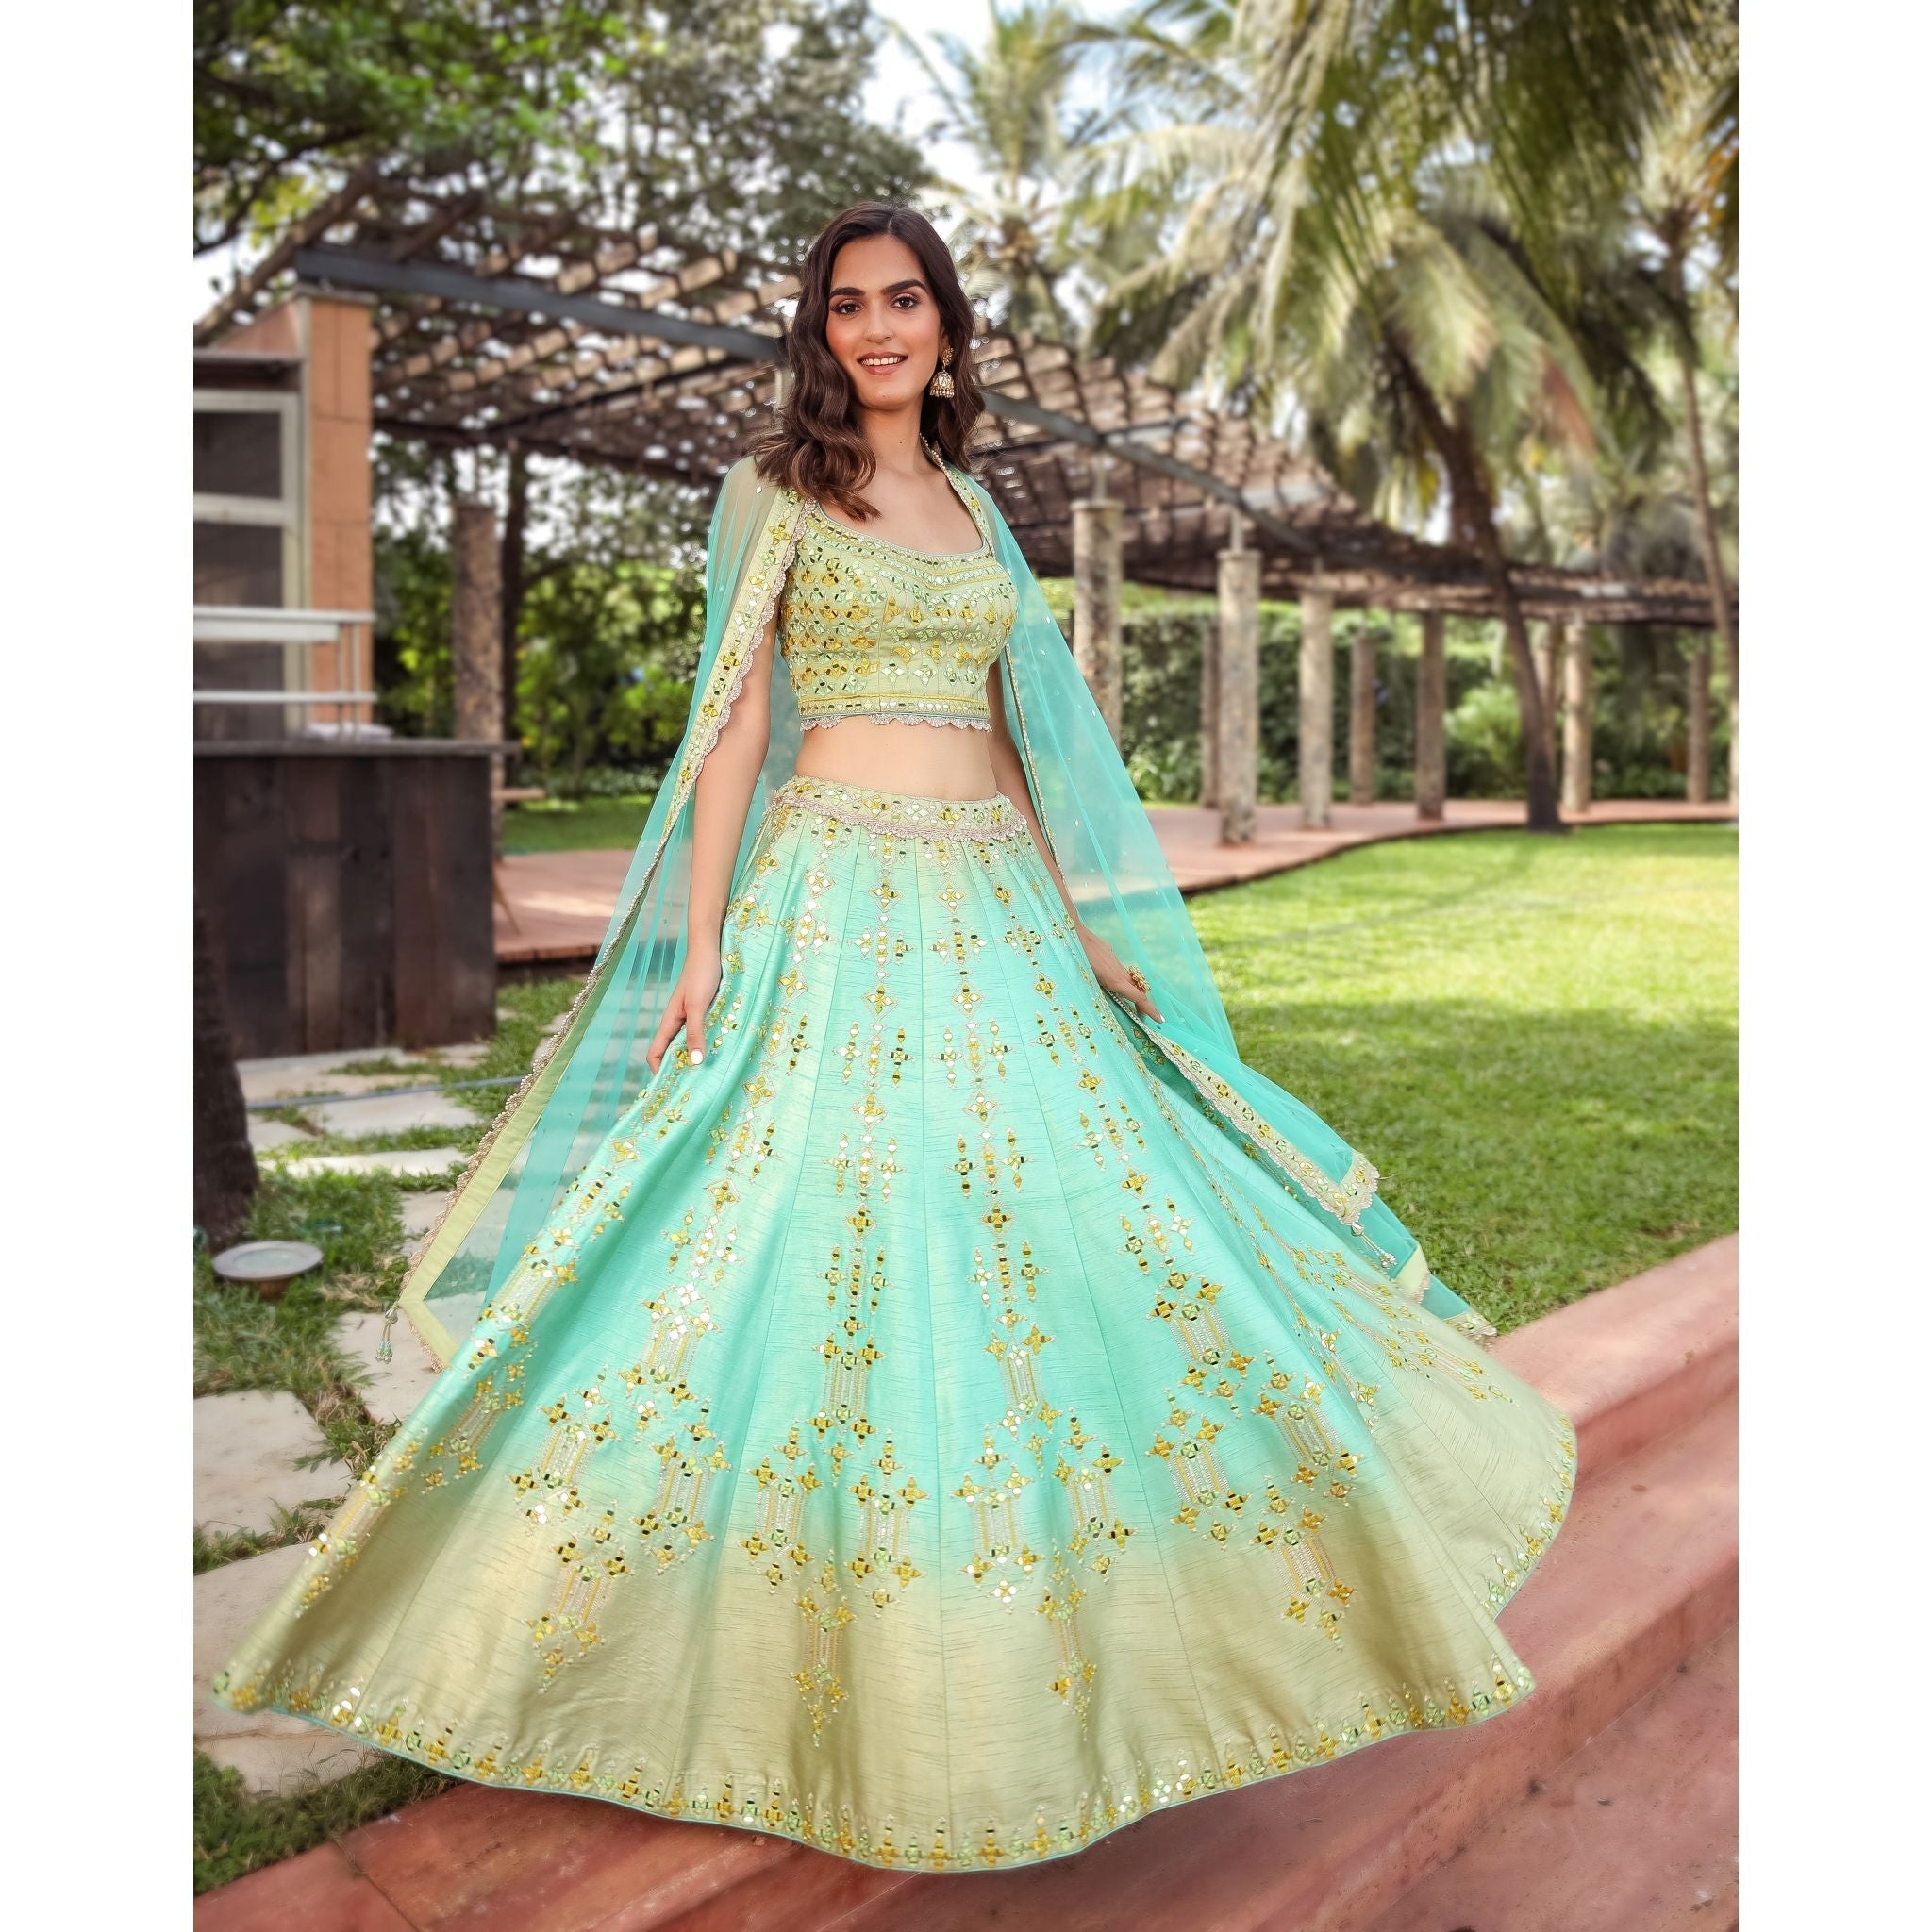 Mint Turquoise Mirrorwork Lehenga Set - Indian Designer Bridal Wedding Outfit